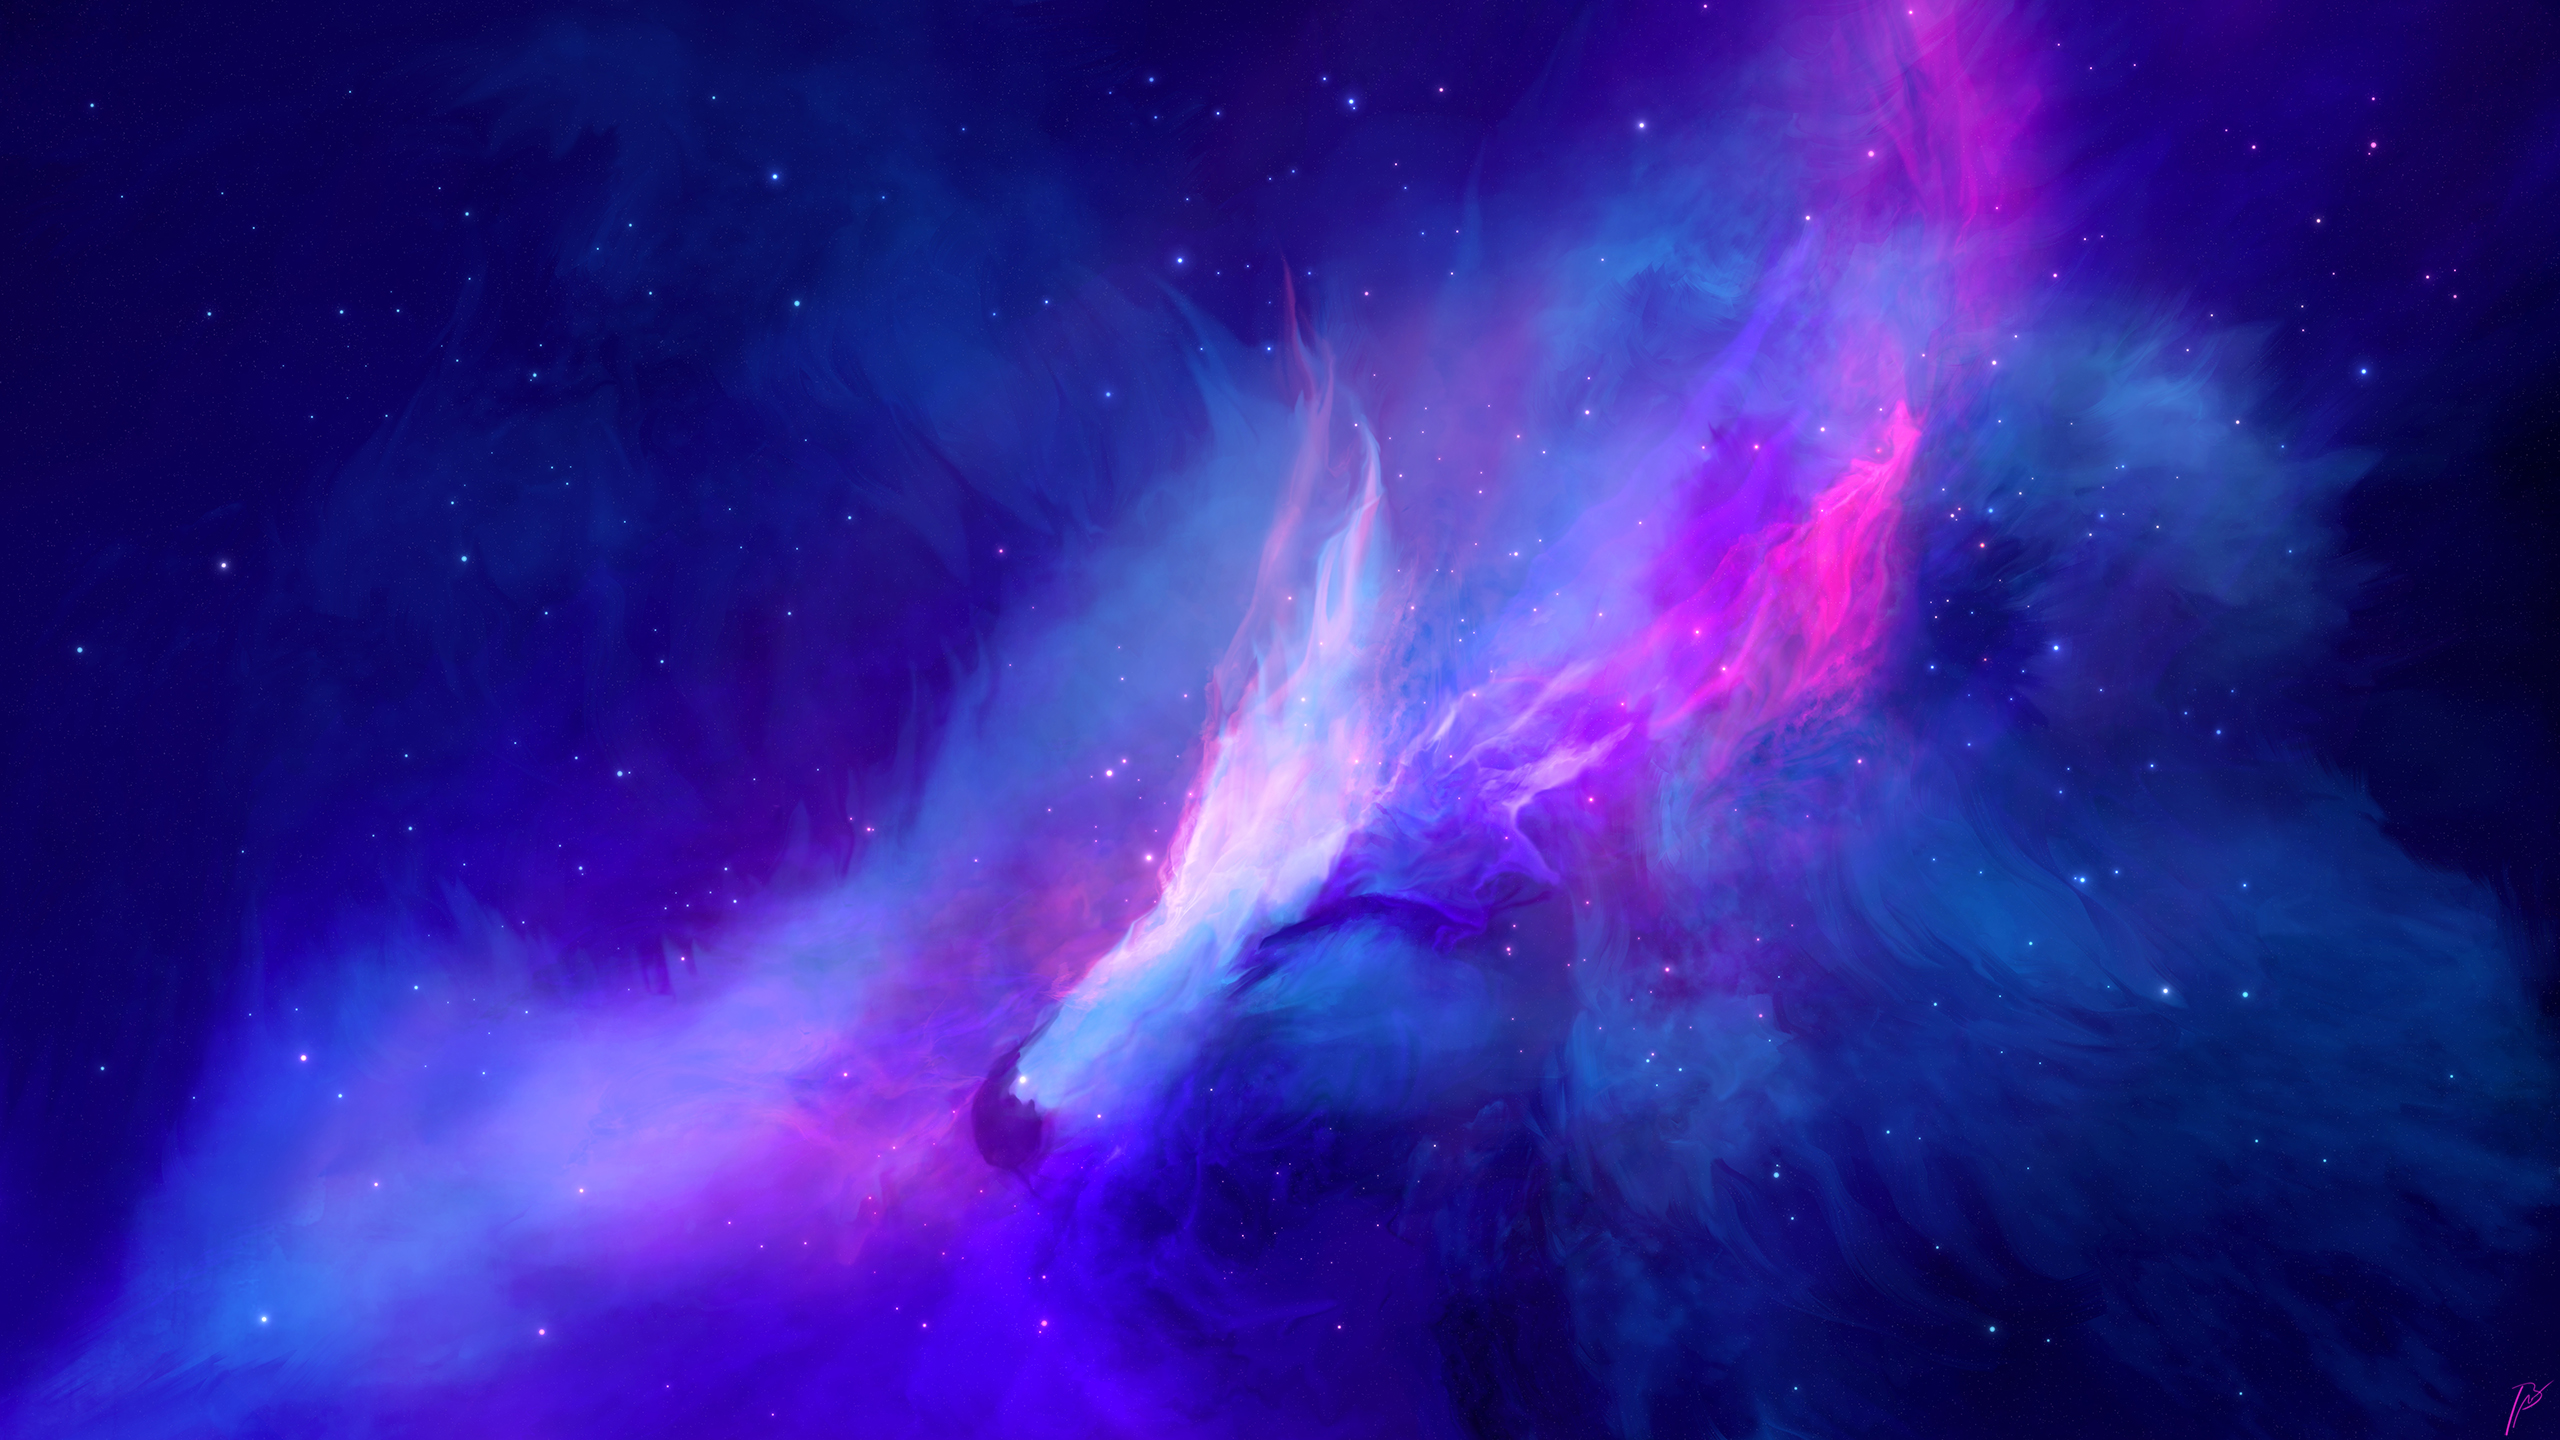 Nebula Space Art Hd Digital Universe 4k Wallpapers Images